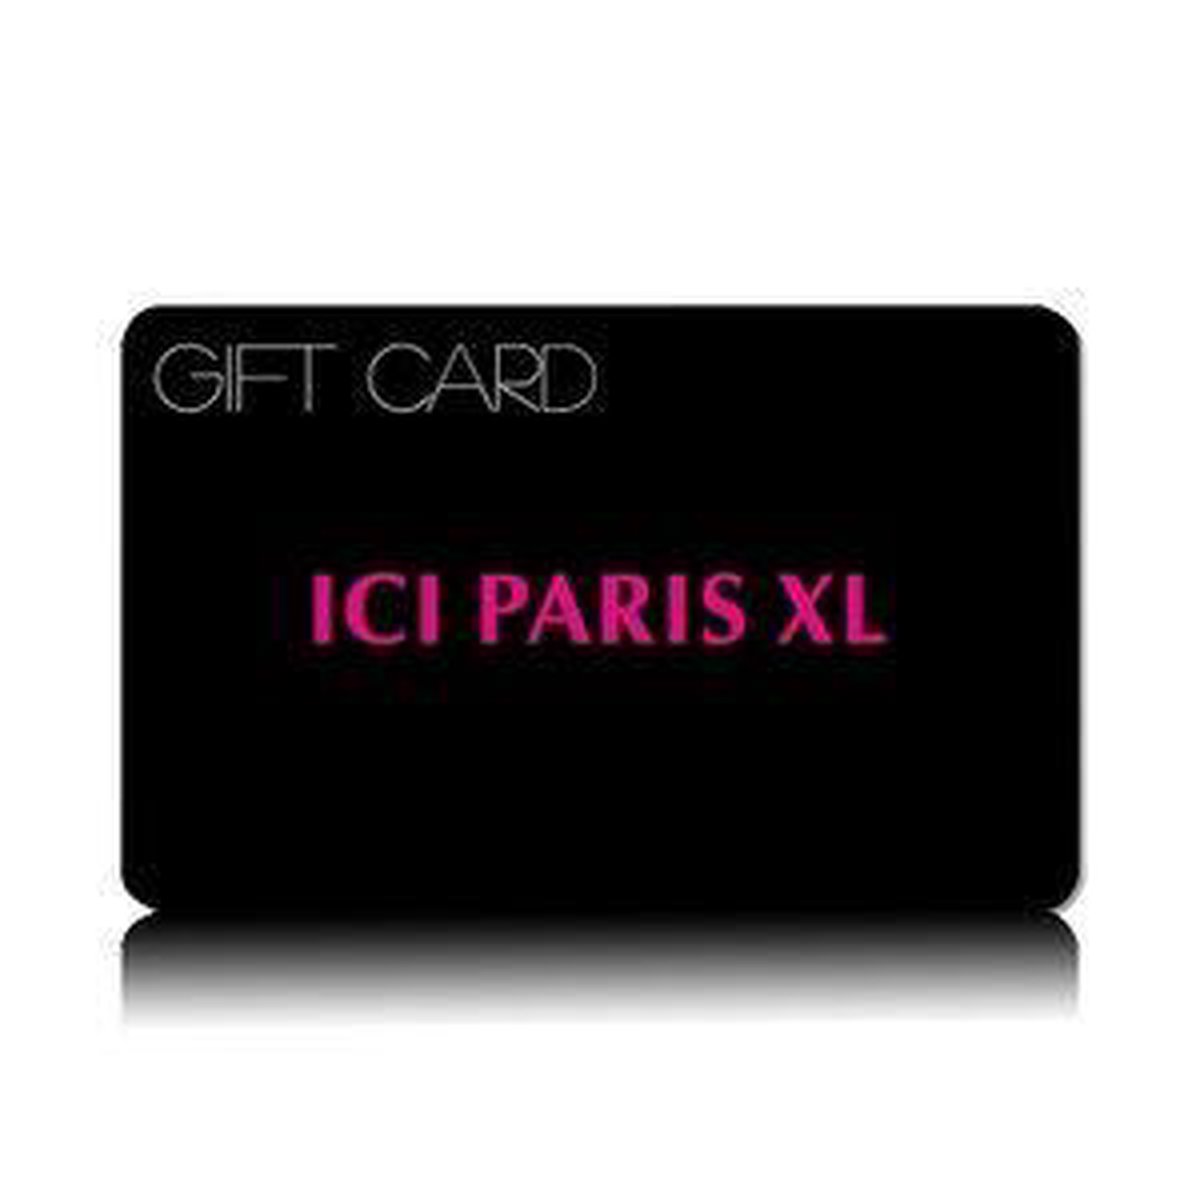 ICI Paris XL gift card - 40 euro | bol.com